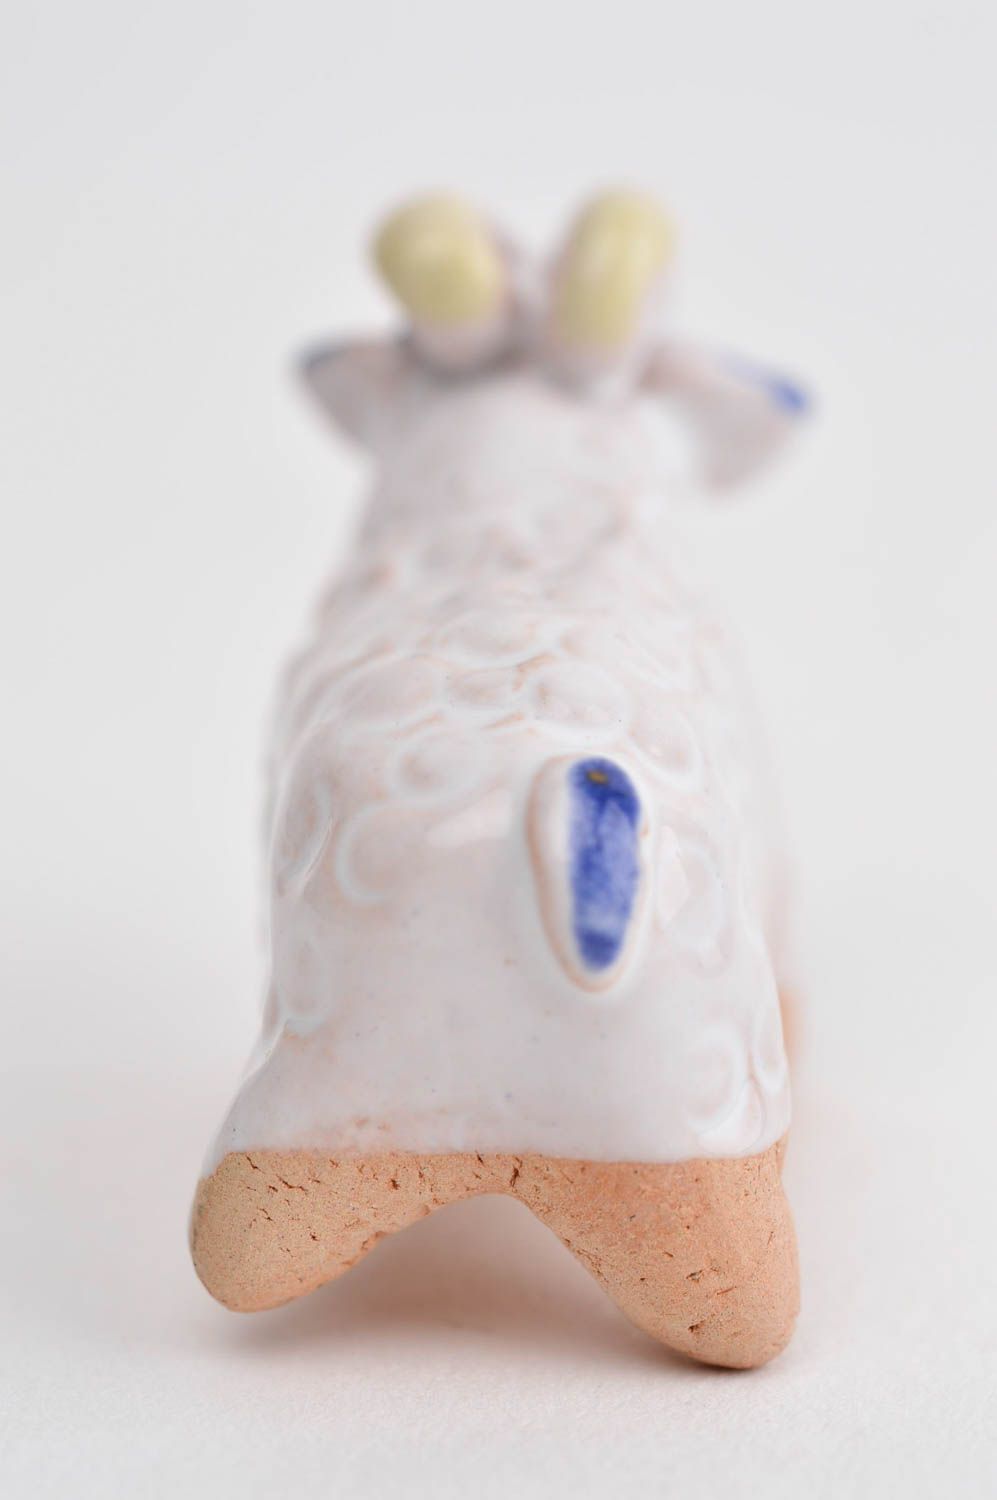 Schaf handmade Keramik Deko schöne Figur aus Ton Tier Miniatur Figur toll foto 9